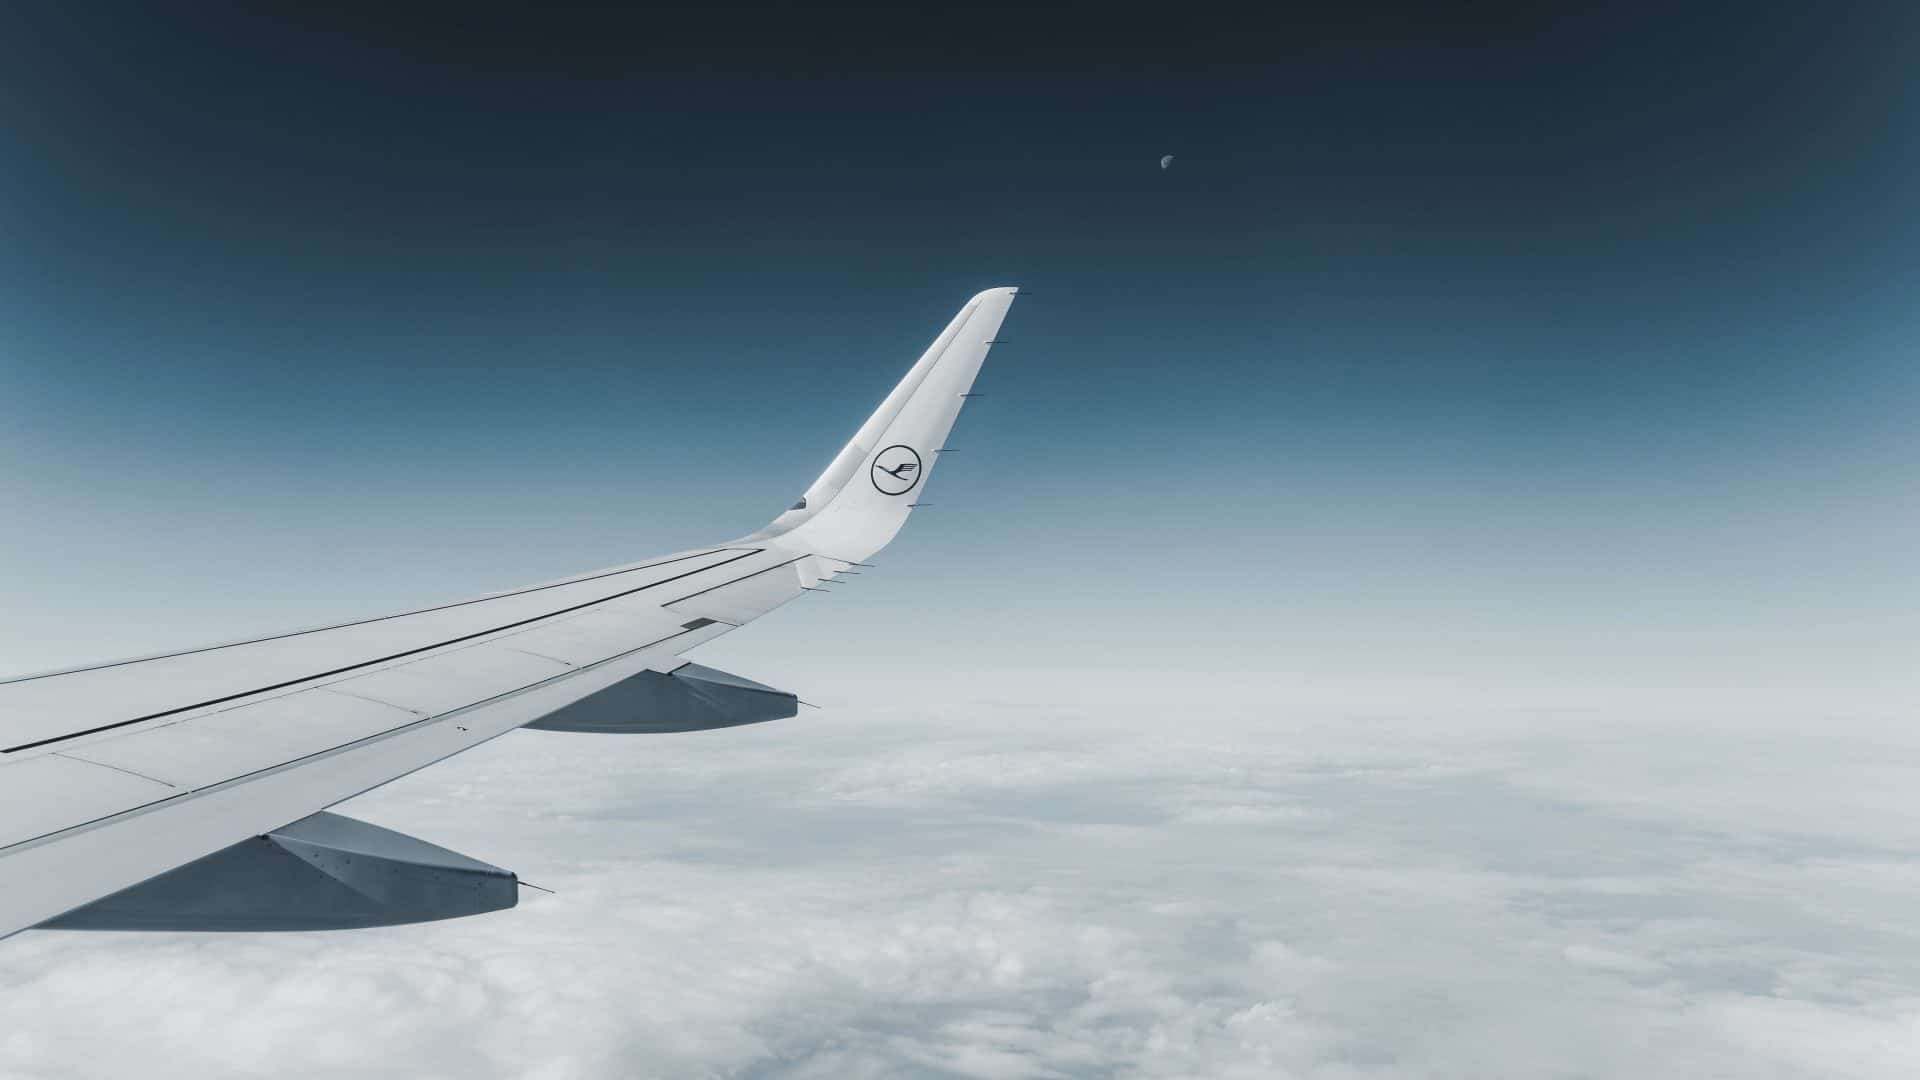 Lufthansa 2